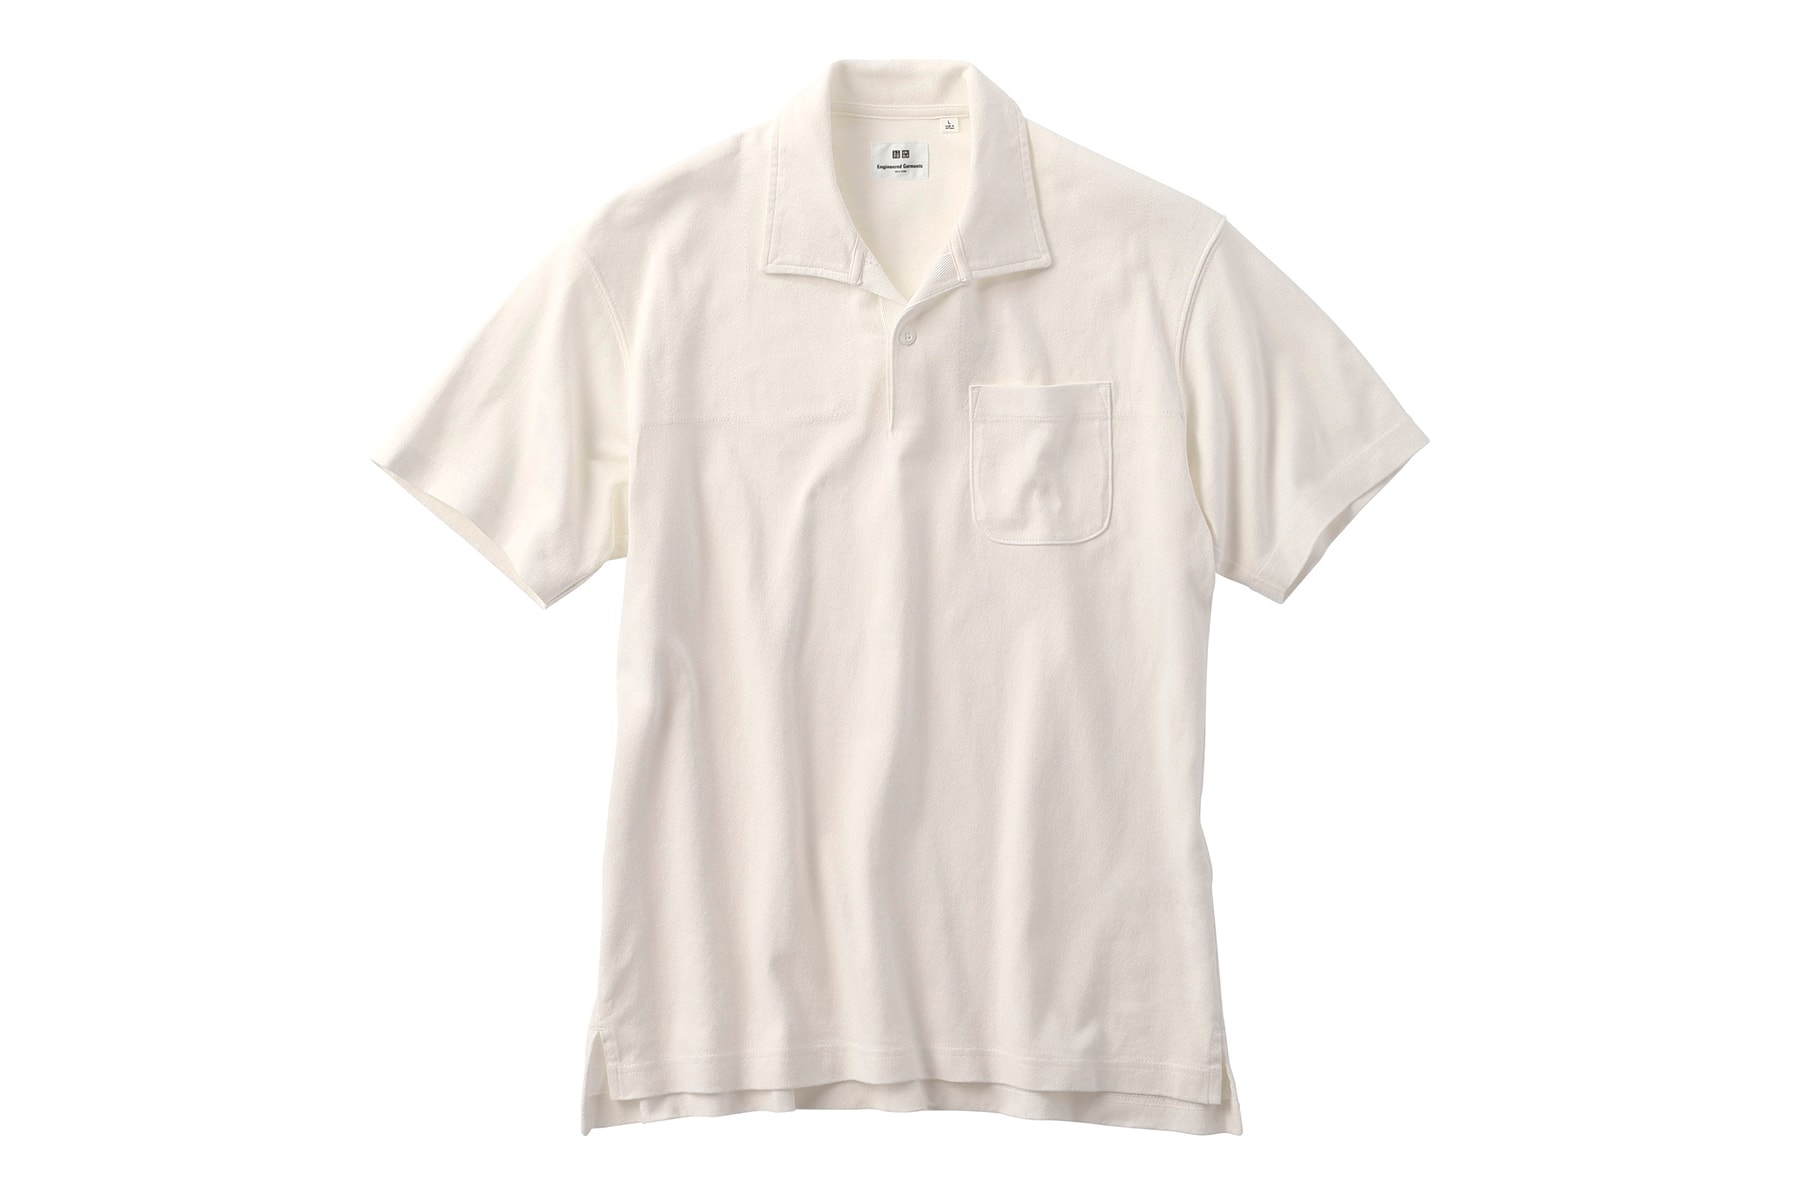 Engineered Garments UNIQLO Polo Shirt Capsule Release Stripe Polka Dots Sleeve Info Date life wear